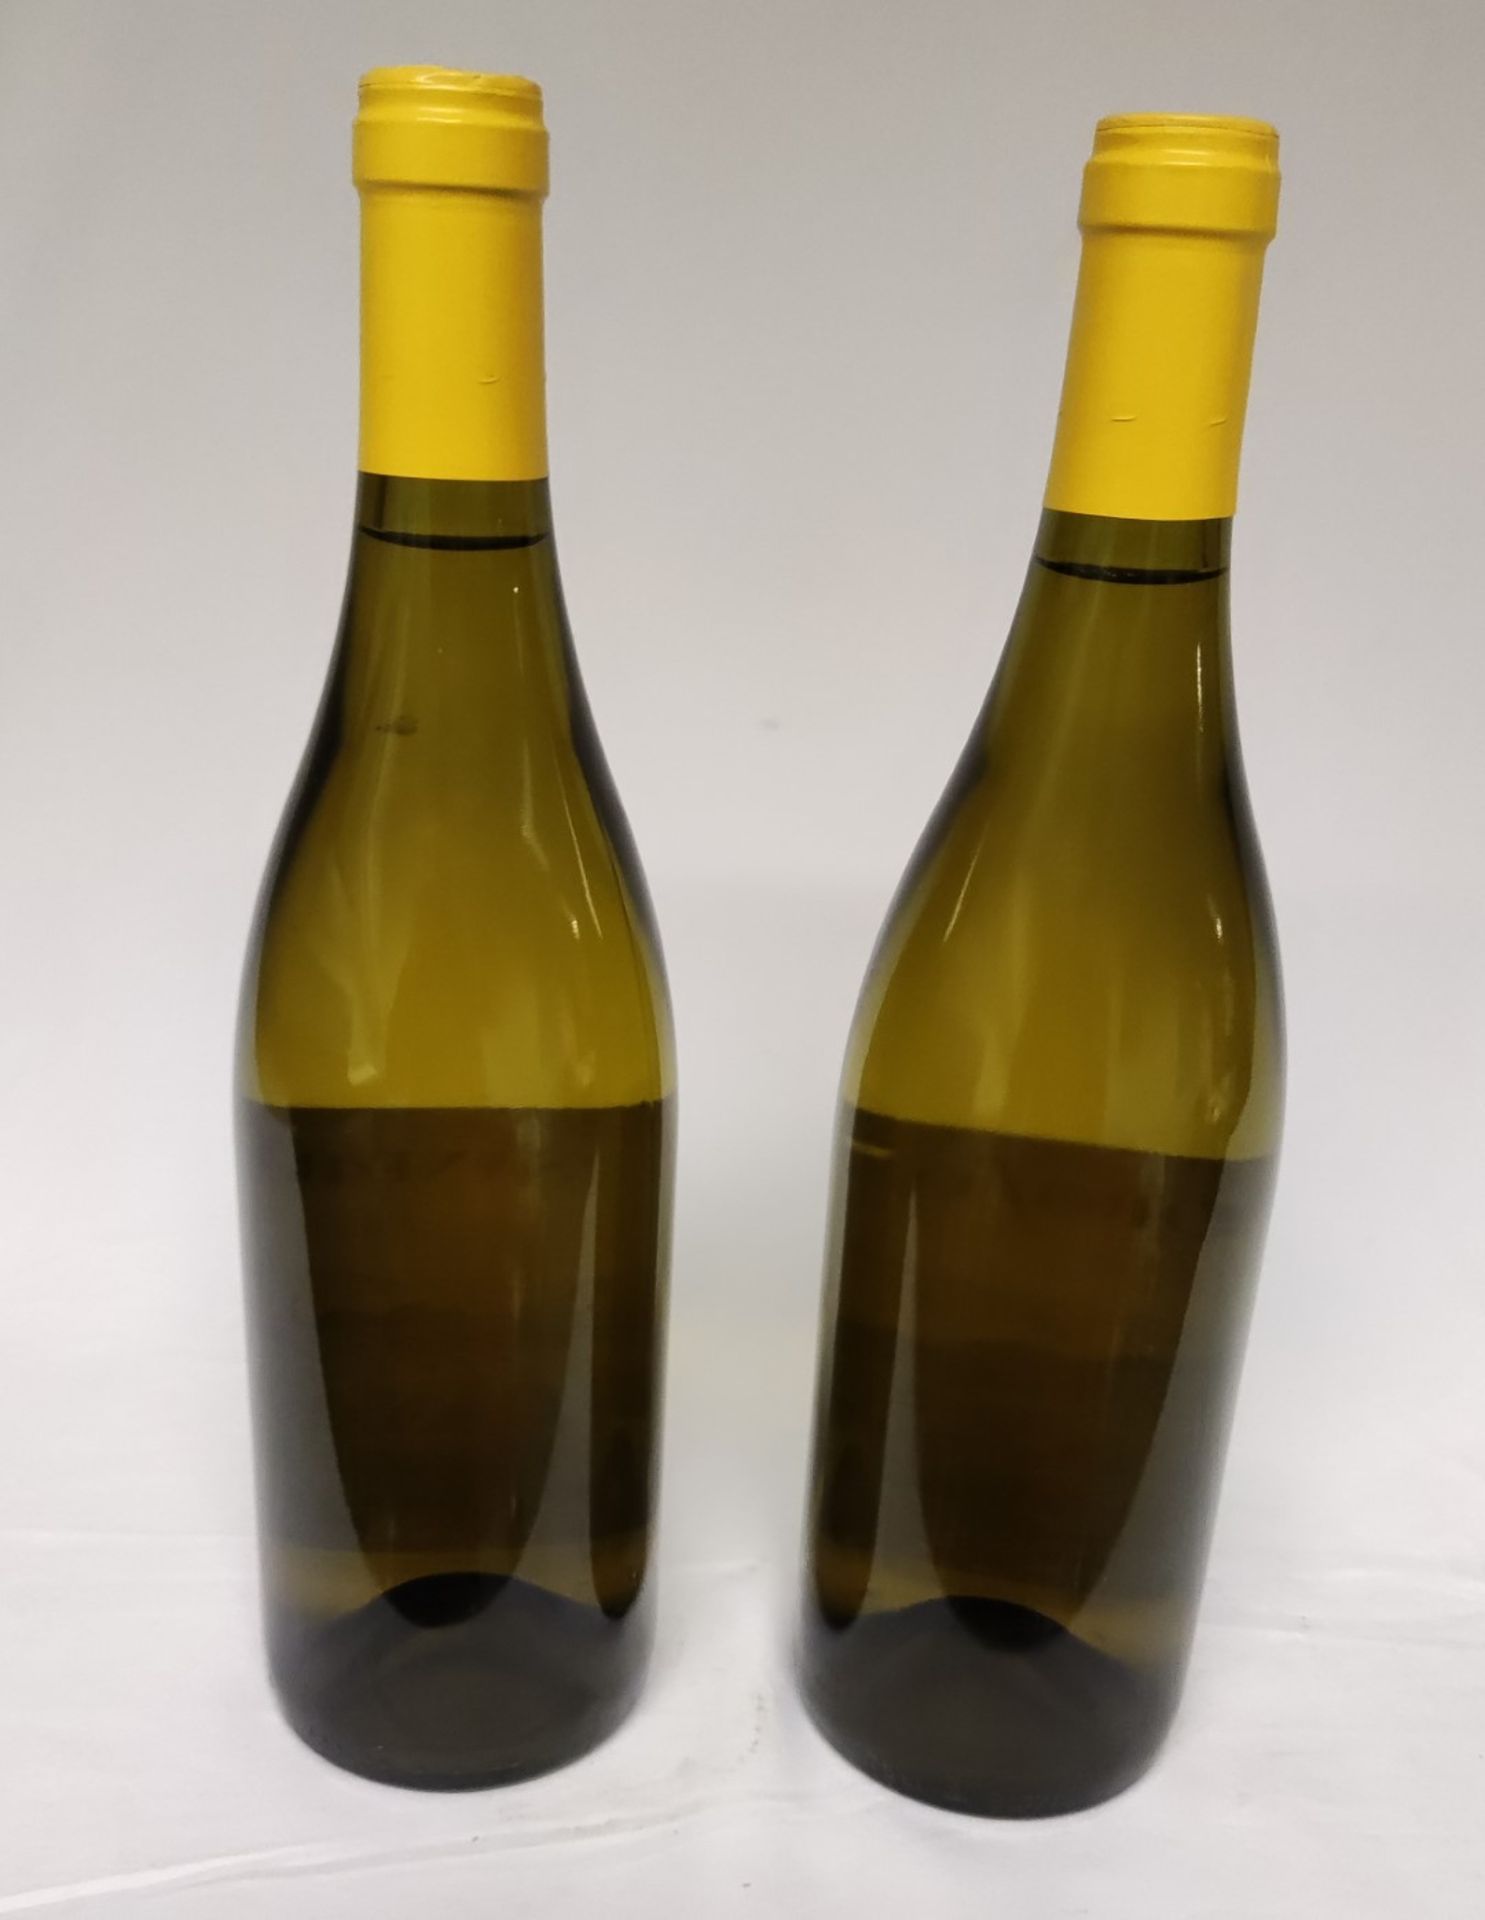 2 x Bottles of 2019 Sandro Fay Alpi Retiche Igt 2019 - Ronco Valene - 750Ml Bottles - Image 3 of 4